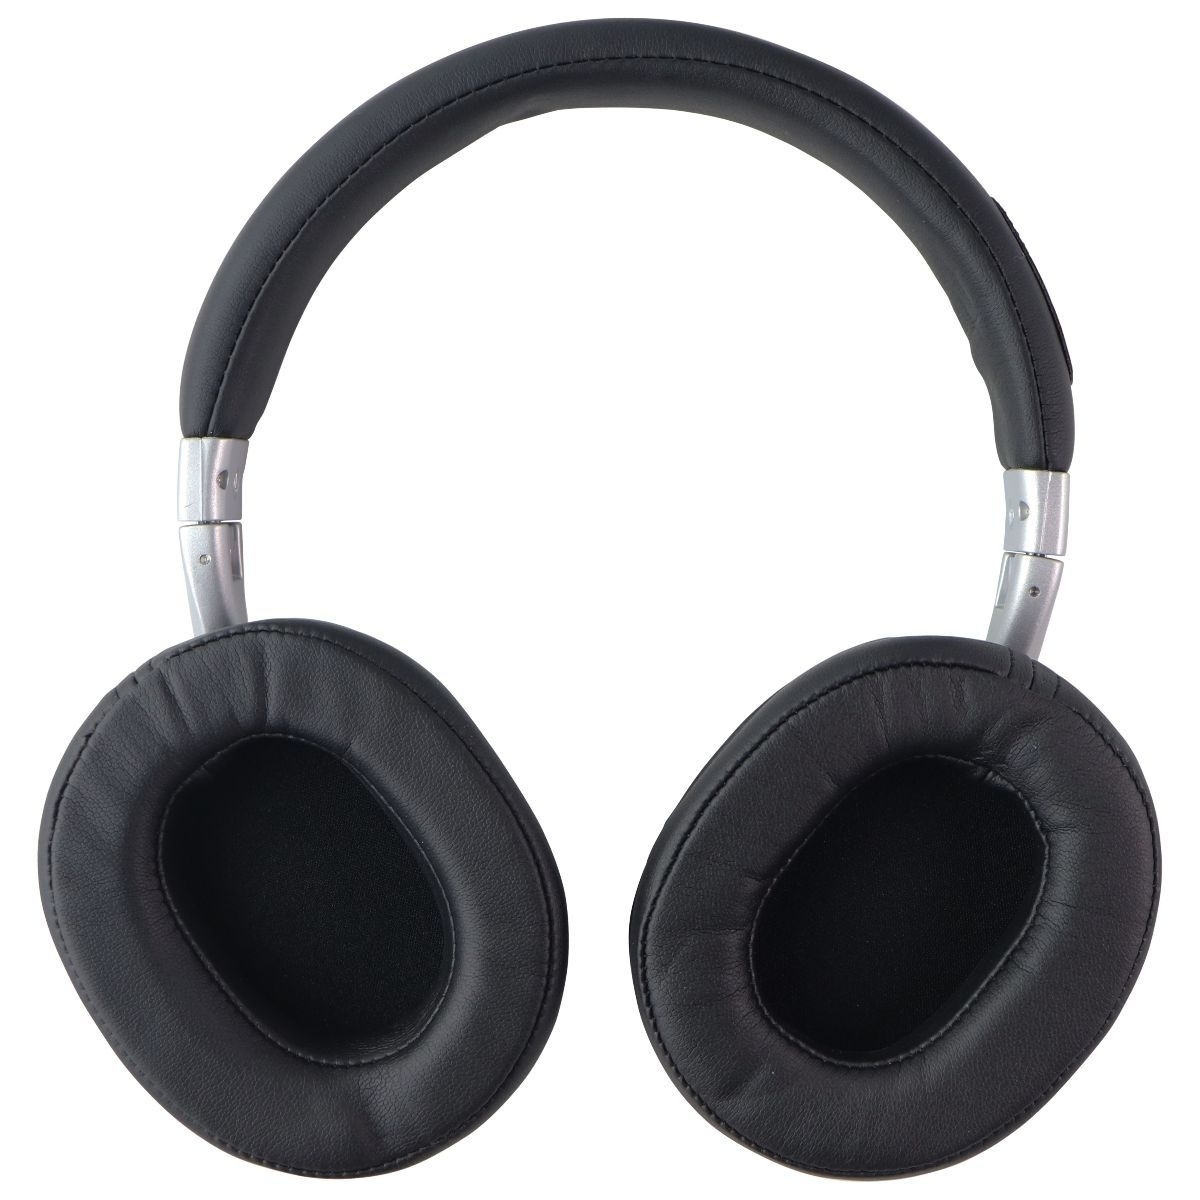 BOHM B76 Wireless Bluetooth Over-Ear Noise Canceling Headphones - Black / Silver